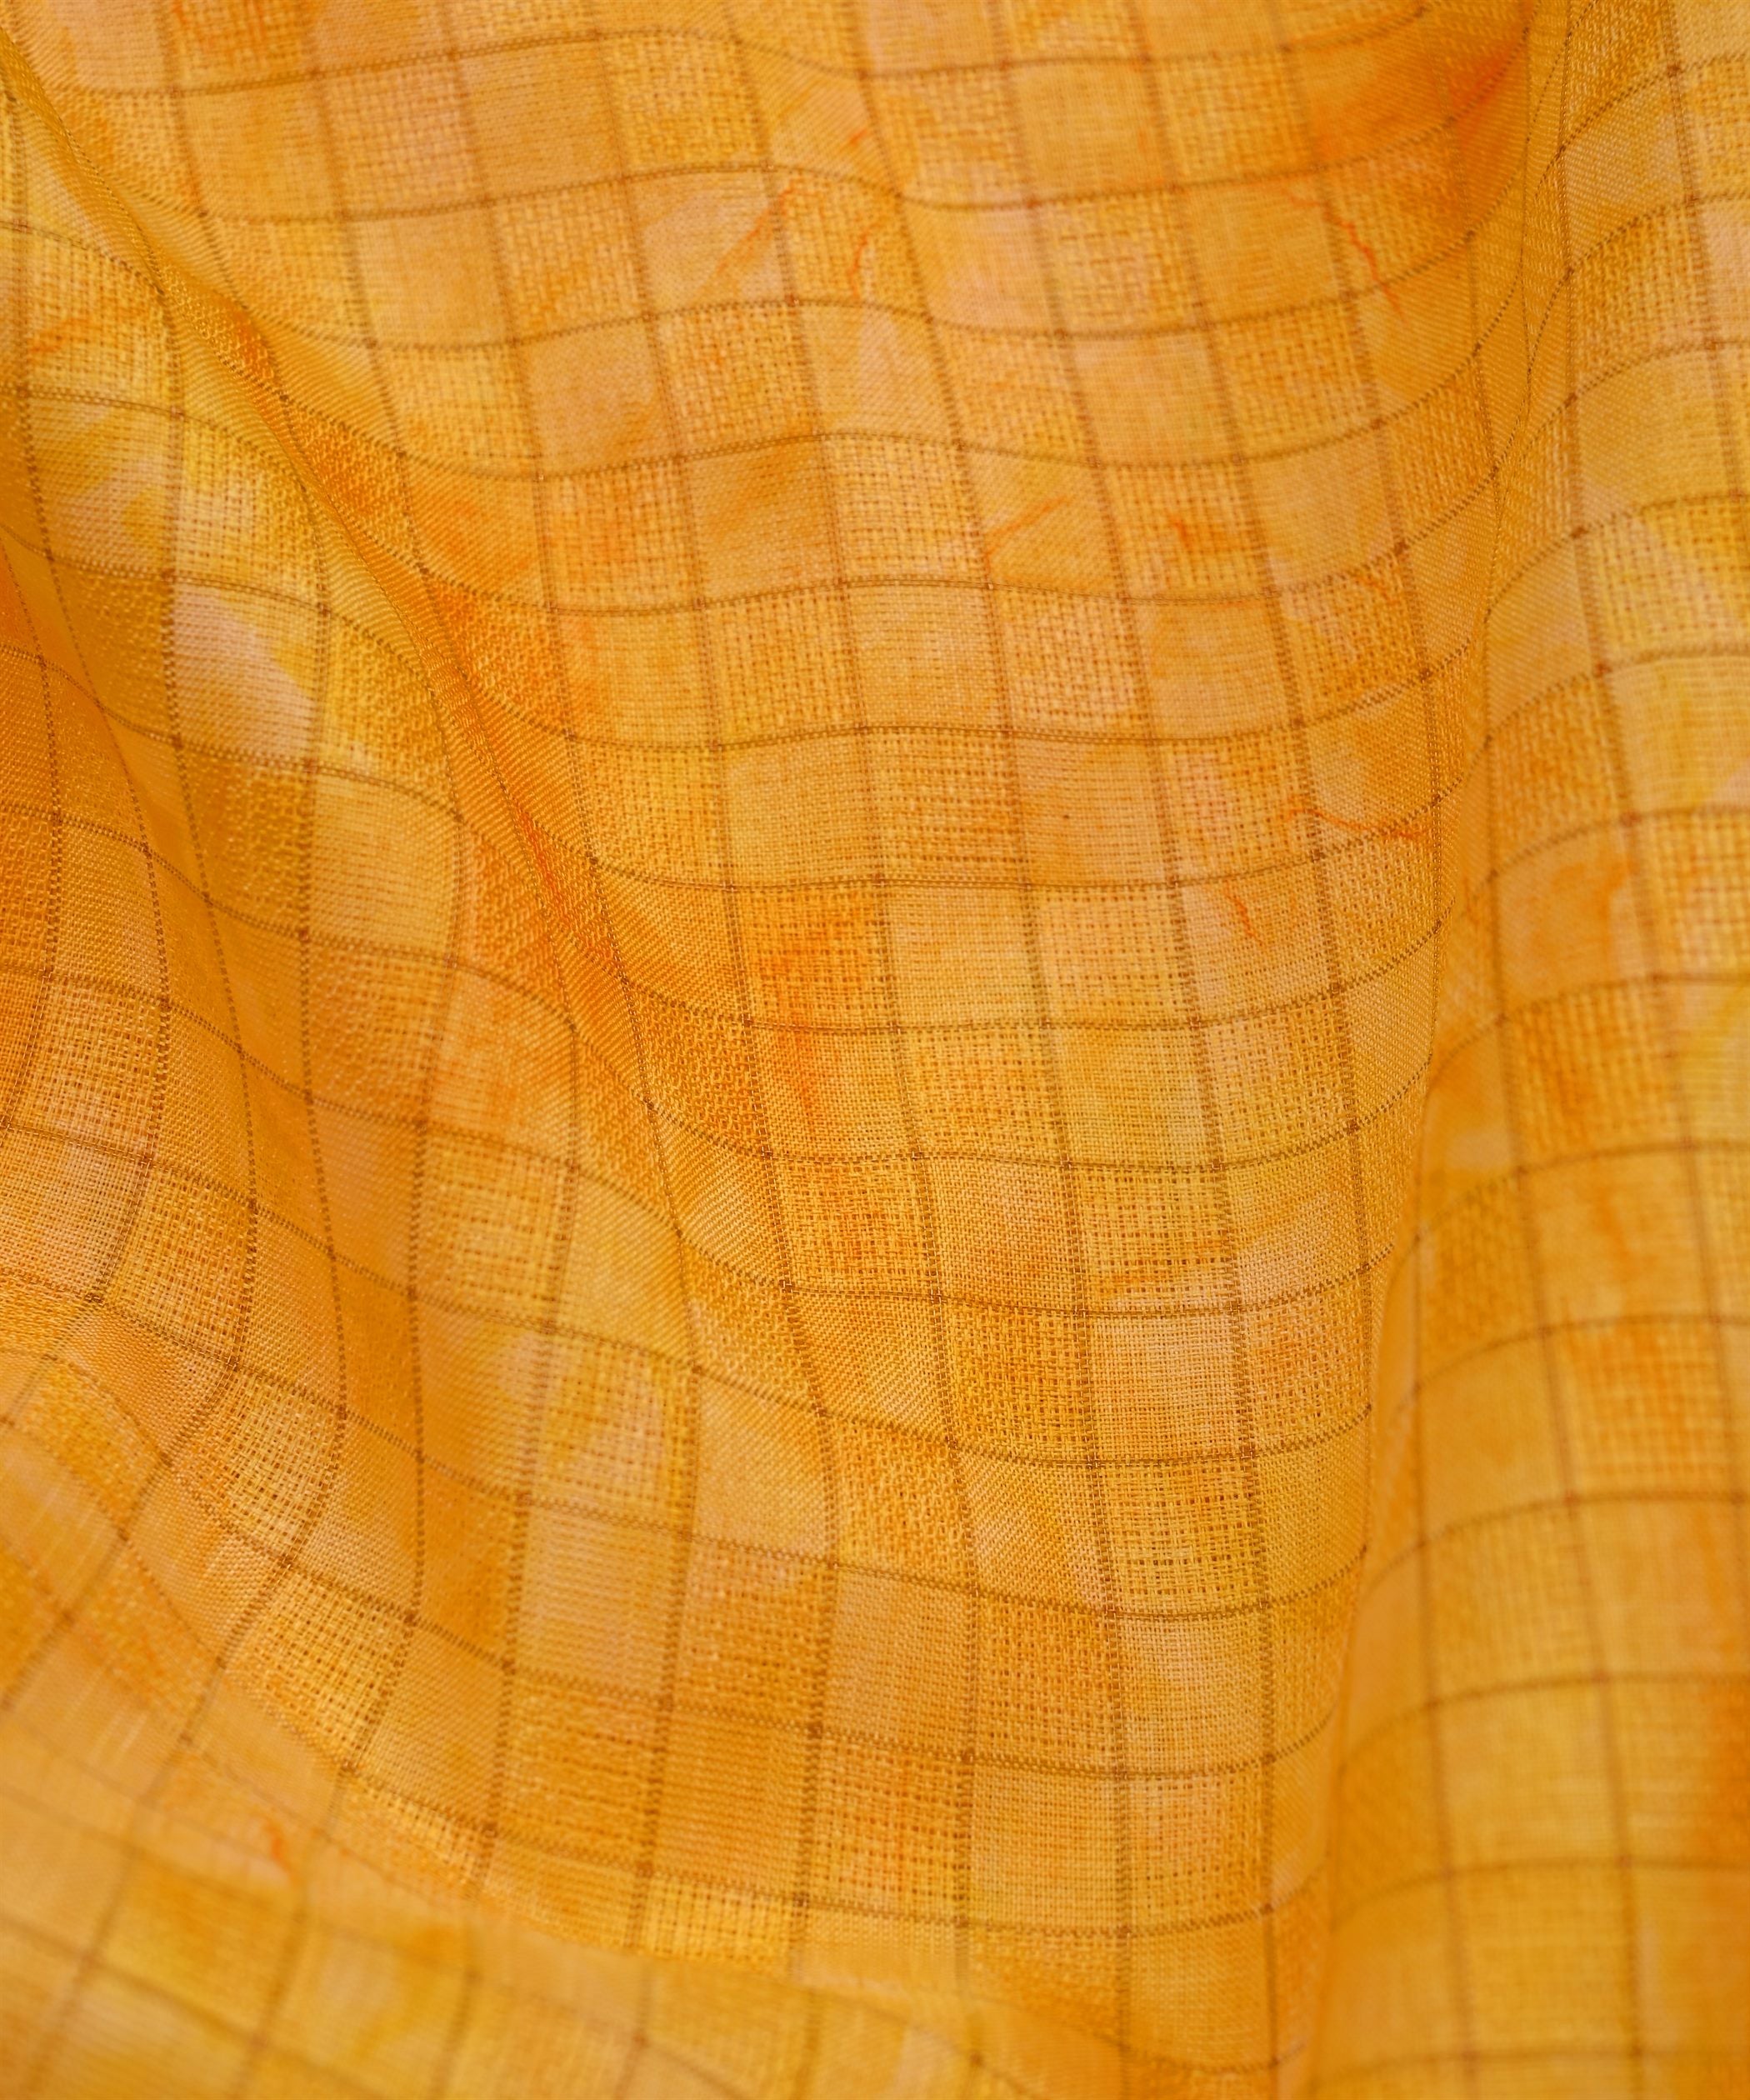 Gold Yellow Jute Fabric with Checks and Shibori Print